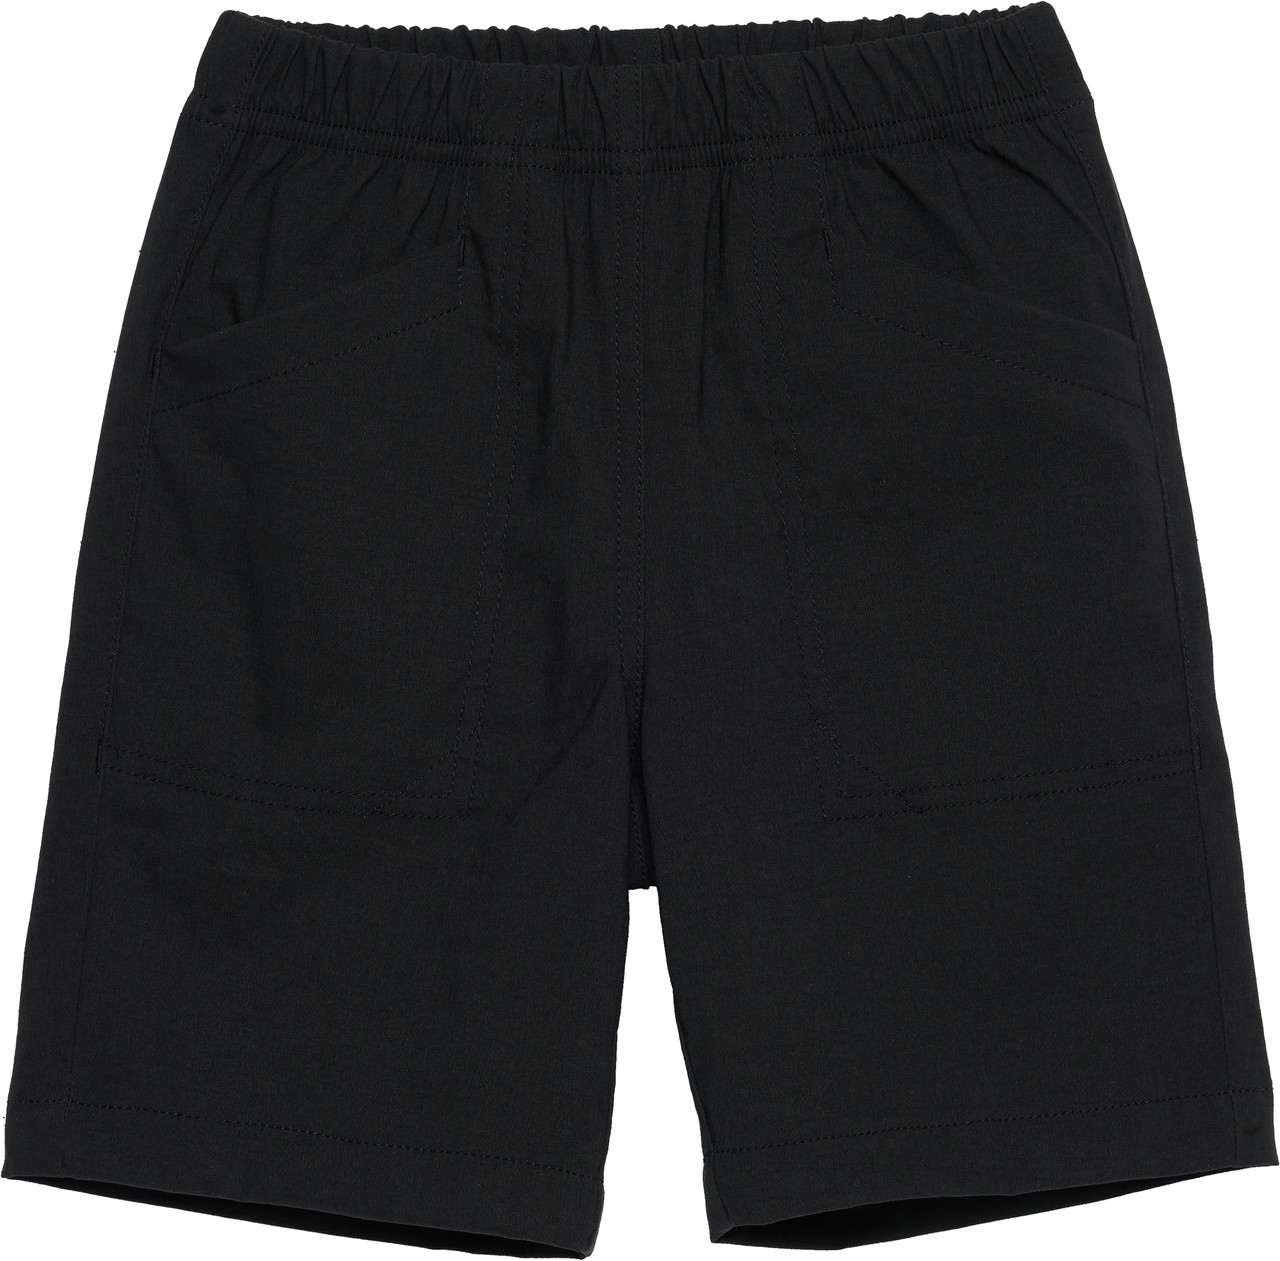 Adventure Stretch Shorts Black